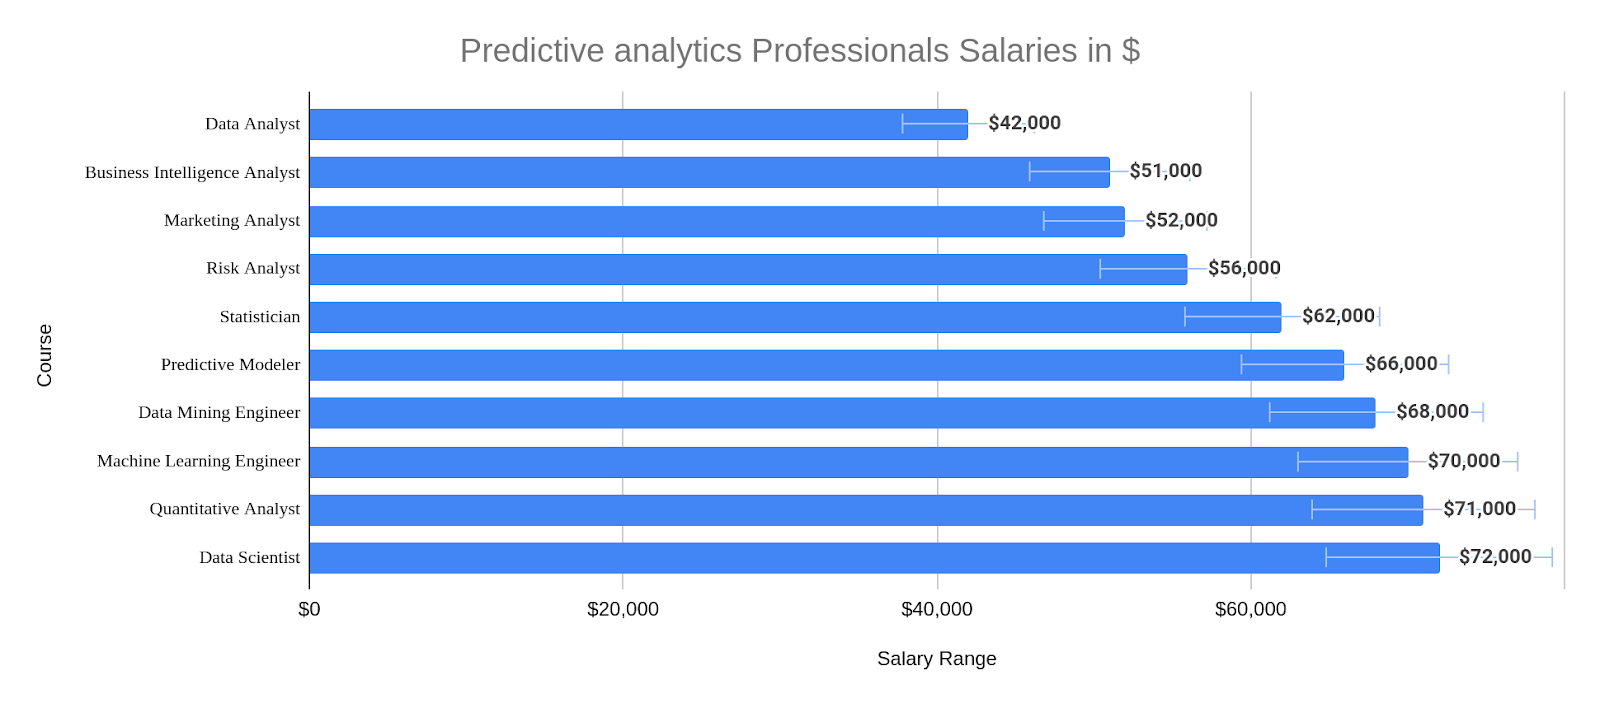 Predictive analytics Professionals Salaries in $